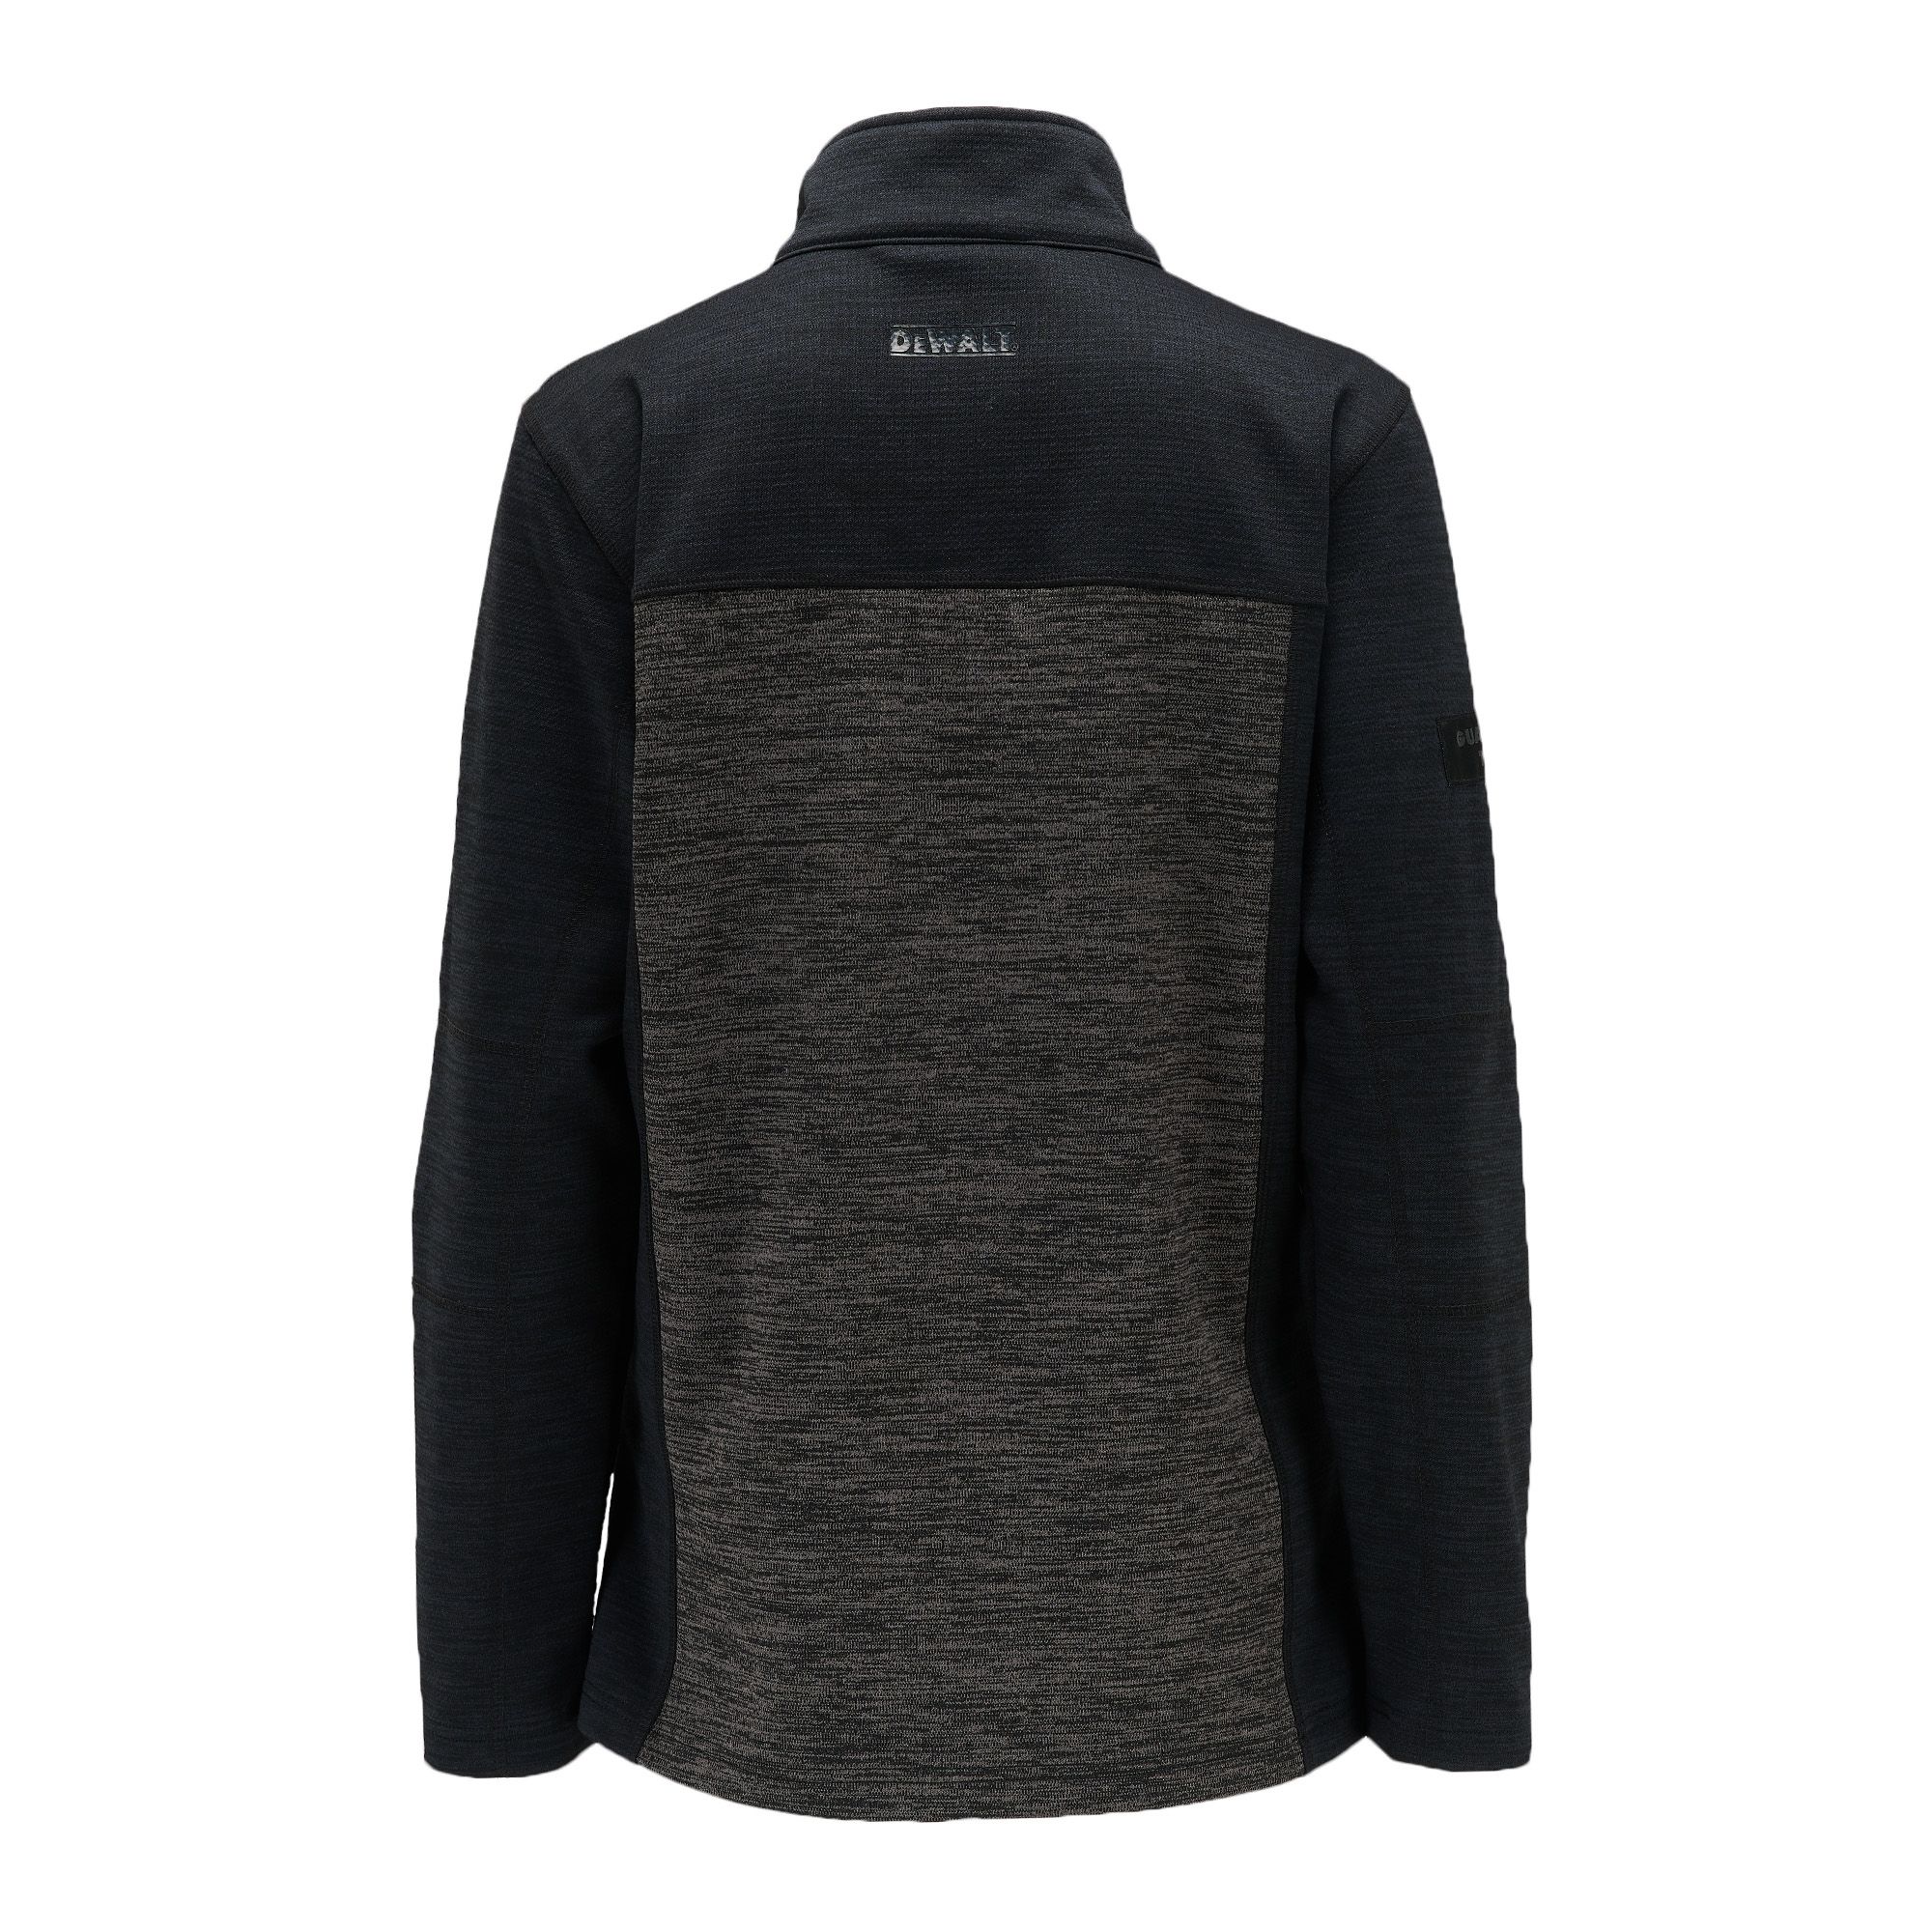 DeWalt Charlotte Black & grey Women's Jacket, Size 10